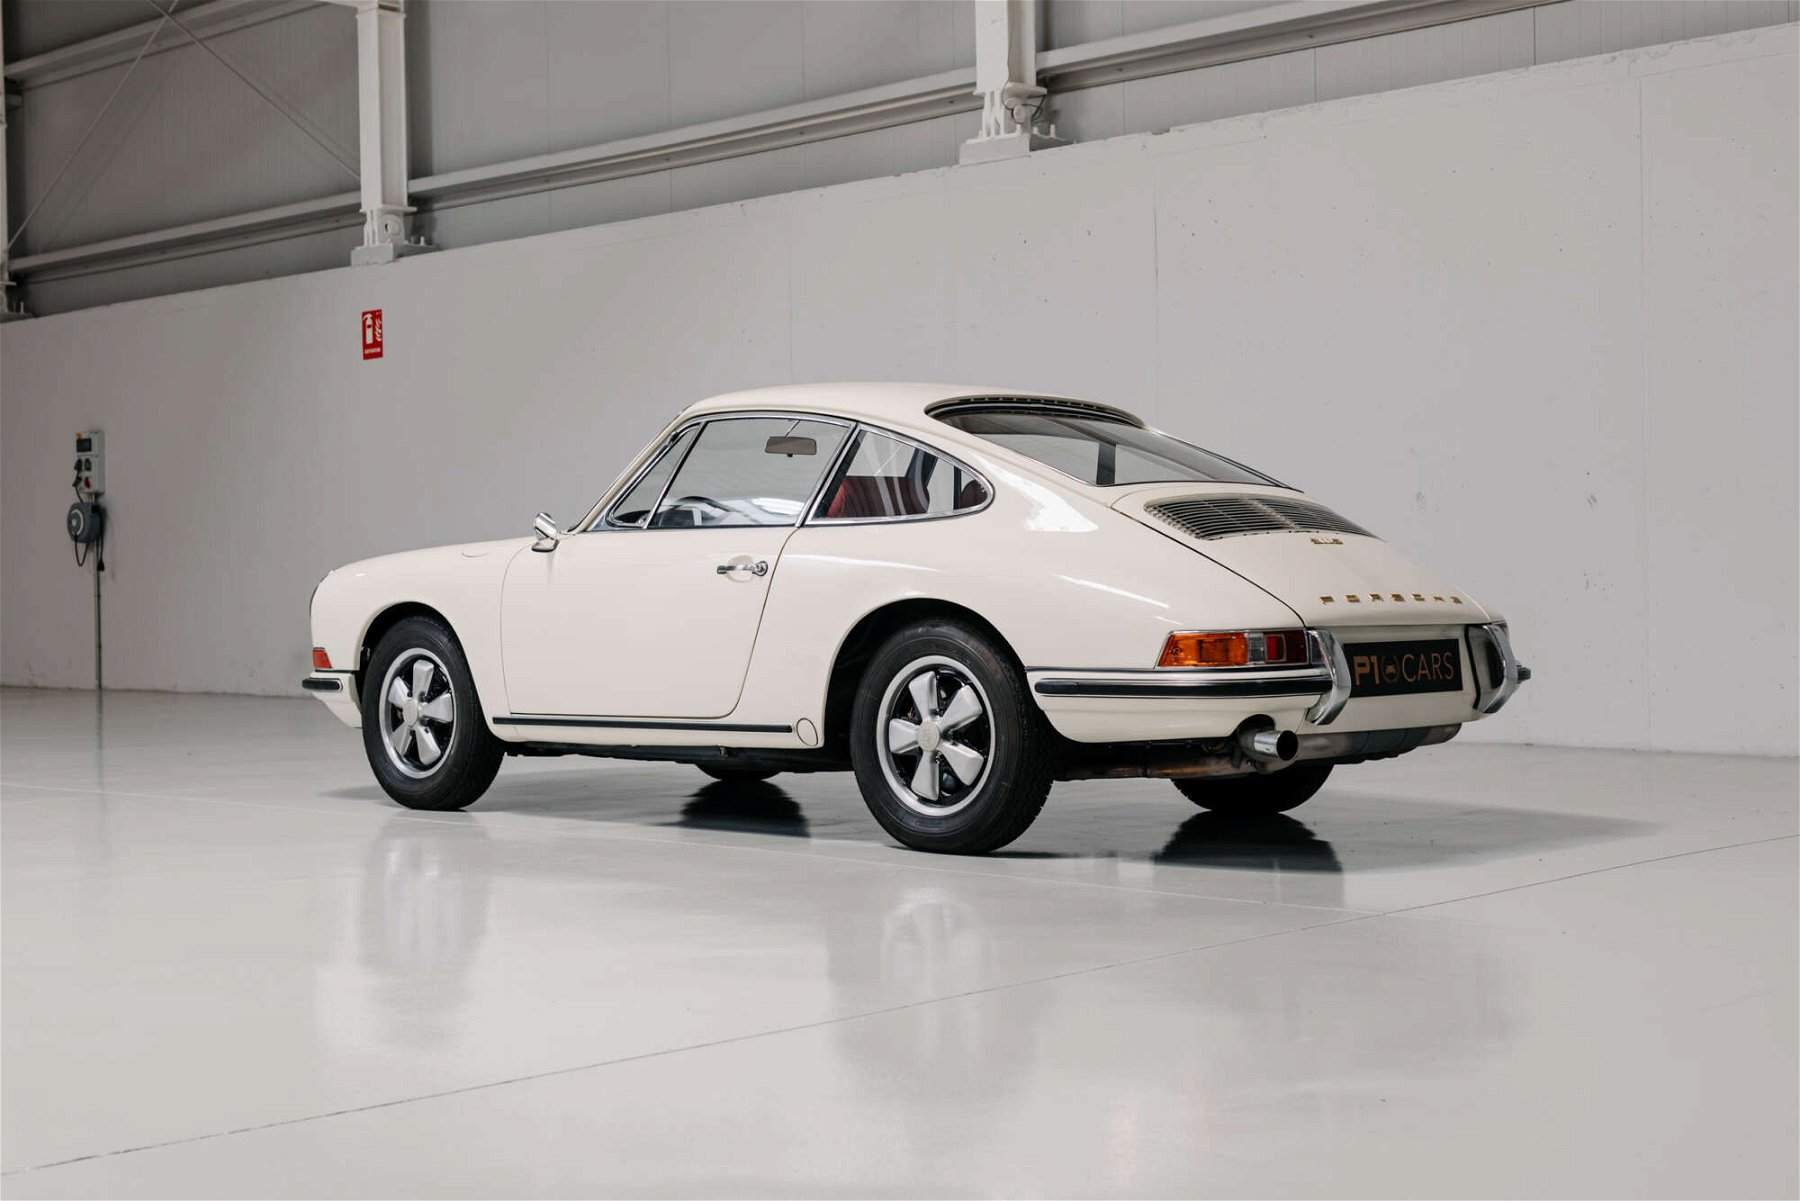 Porsche 911 S 1966  - Marketplace for Porsche Sports Cars